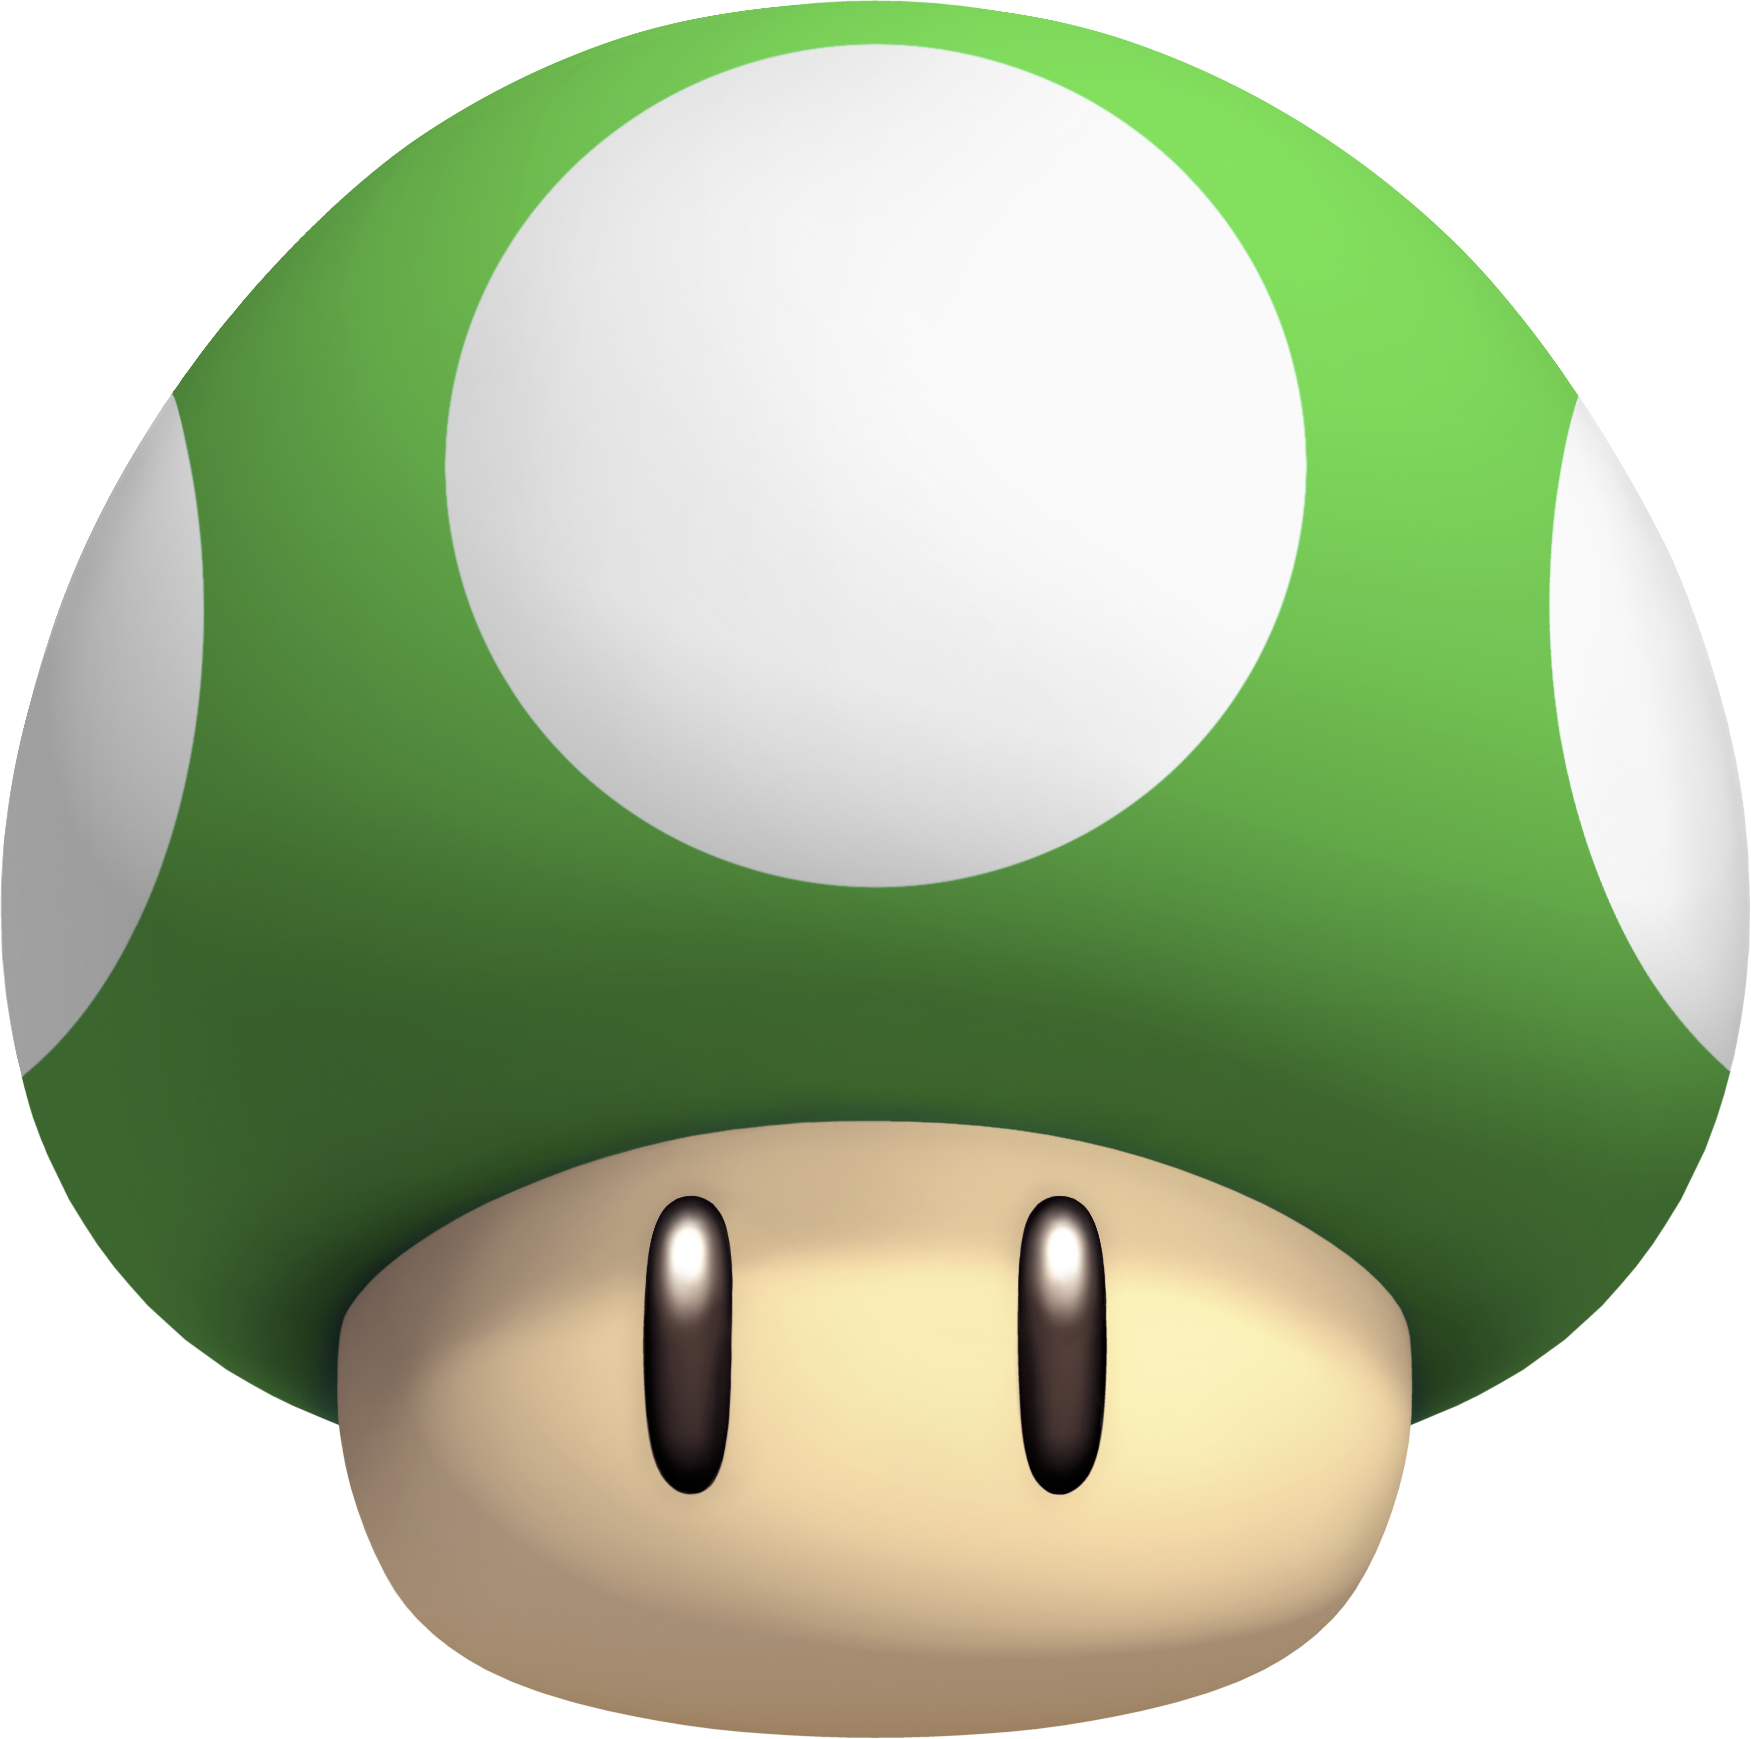 1-Up Mushroom | Nintendo | FANDOM powered by Wikia